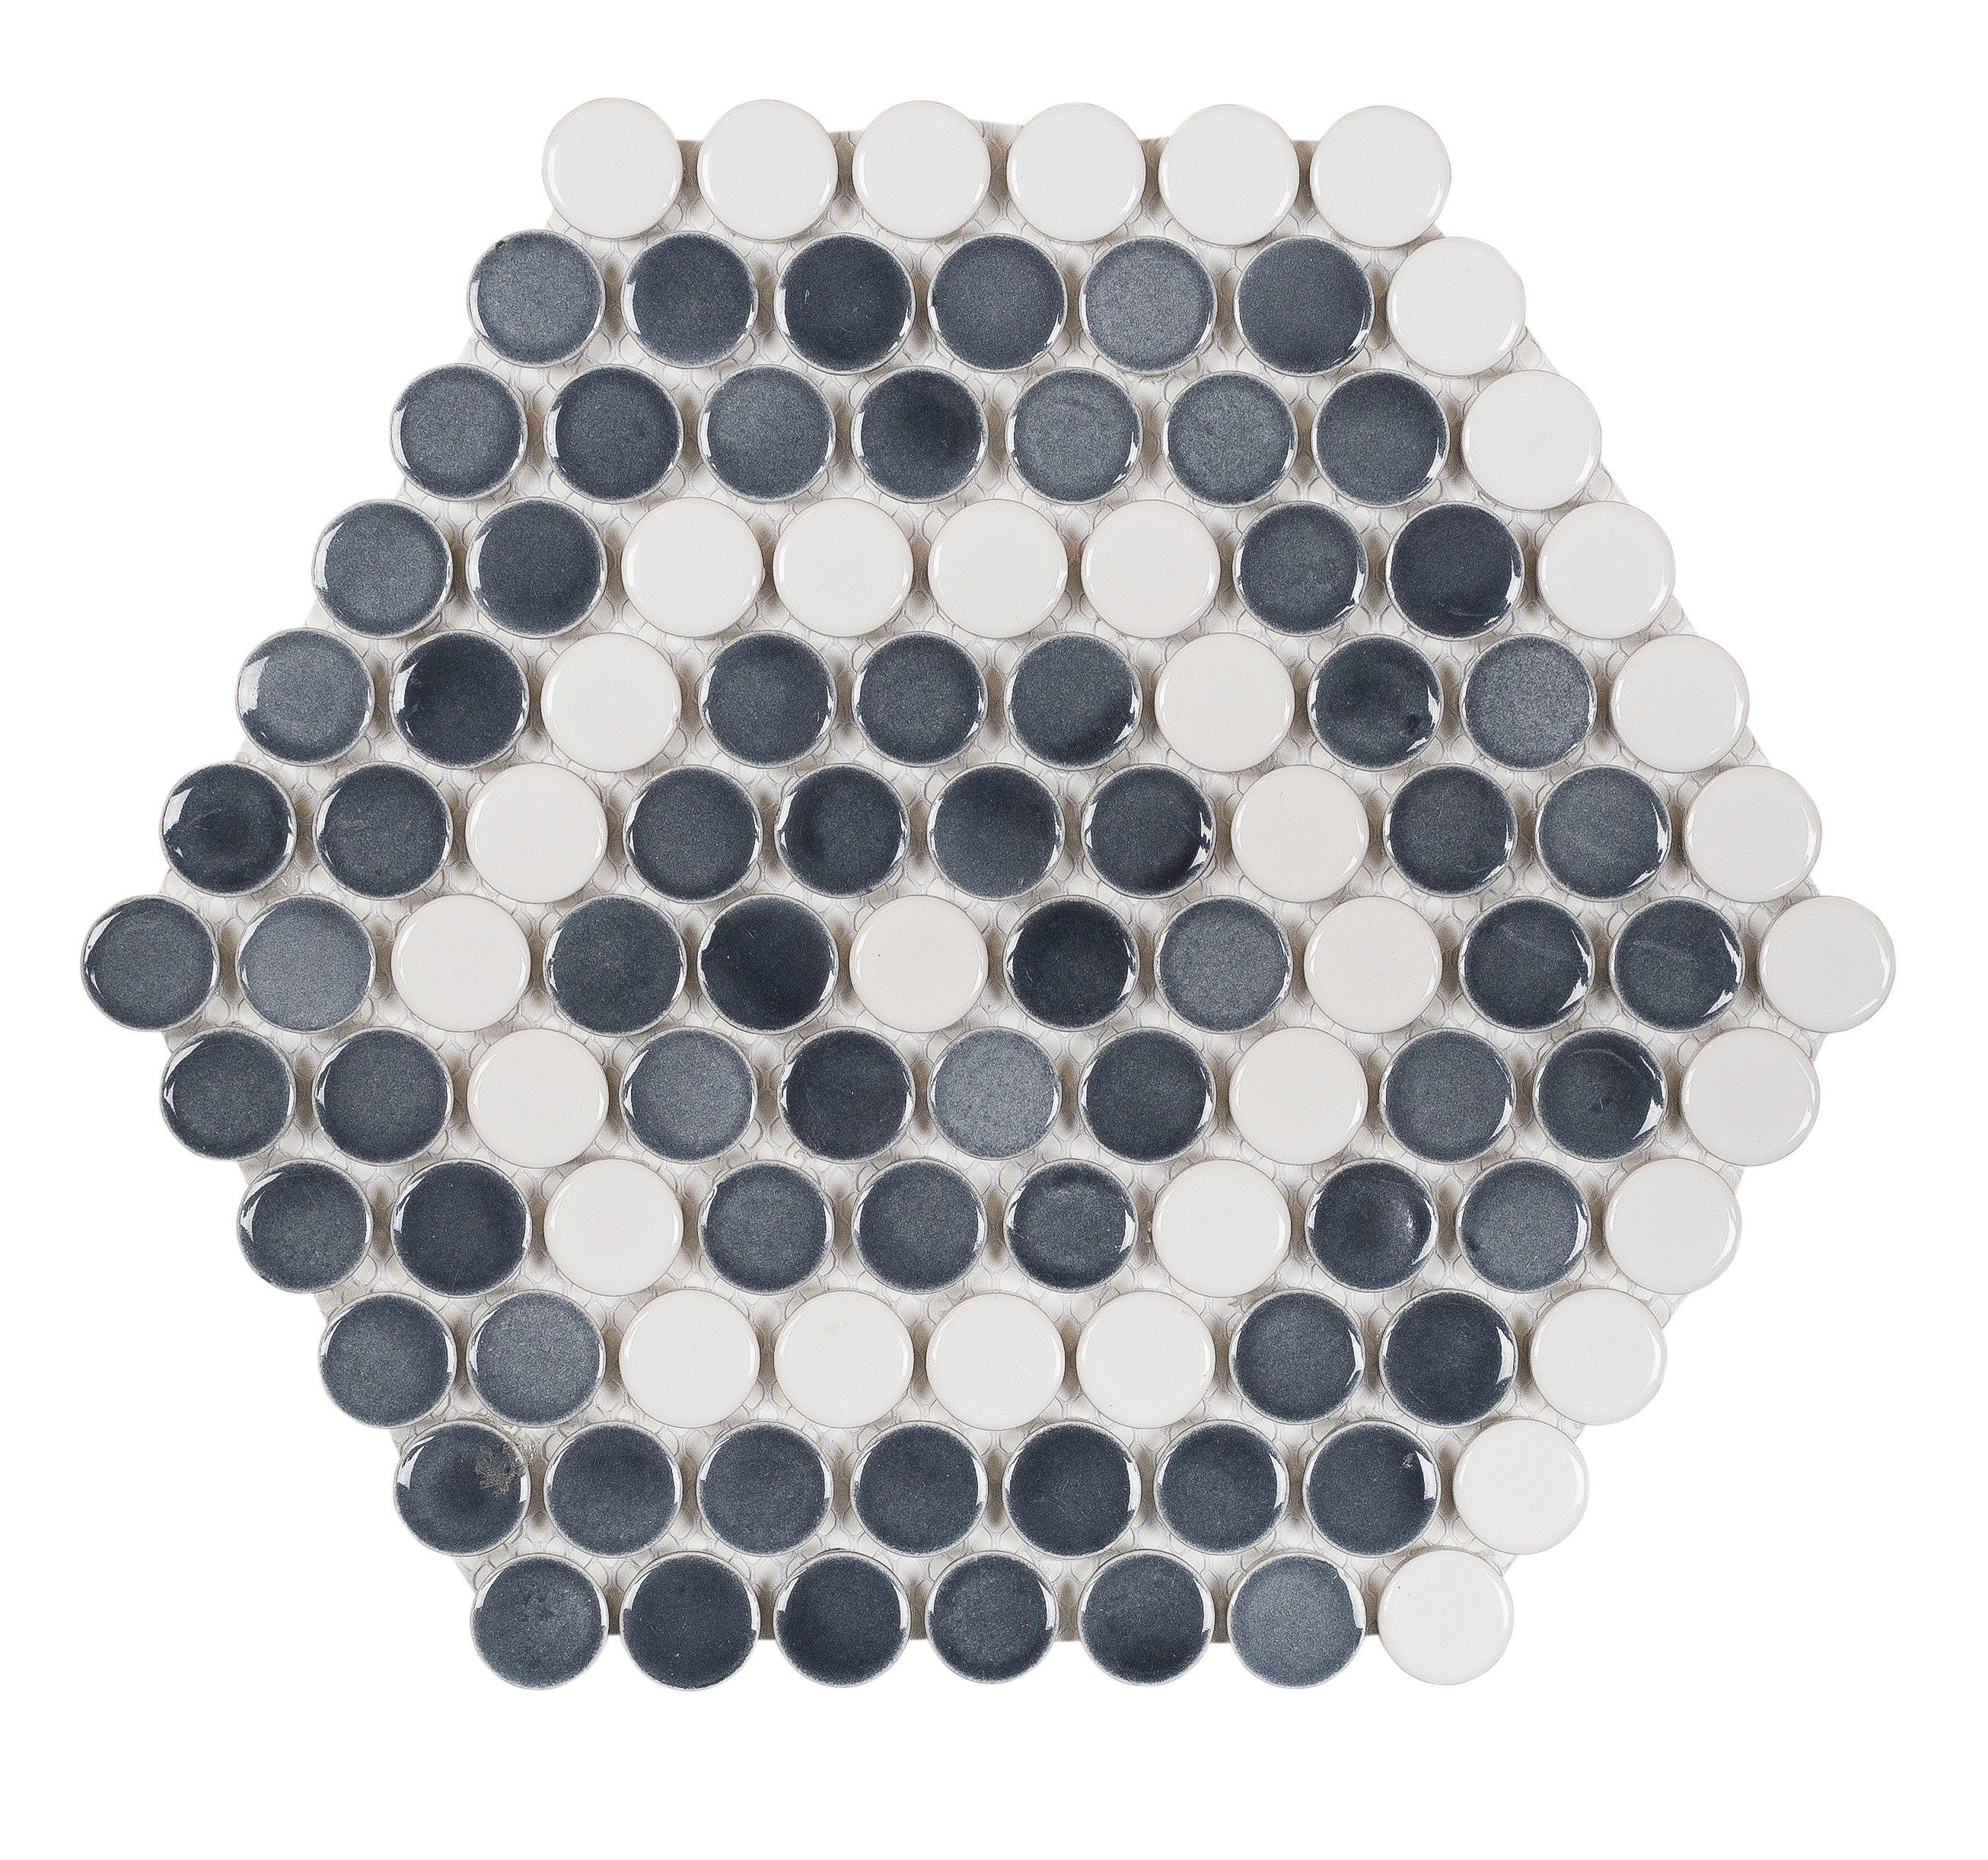 govee hexagon designs